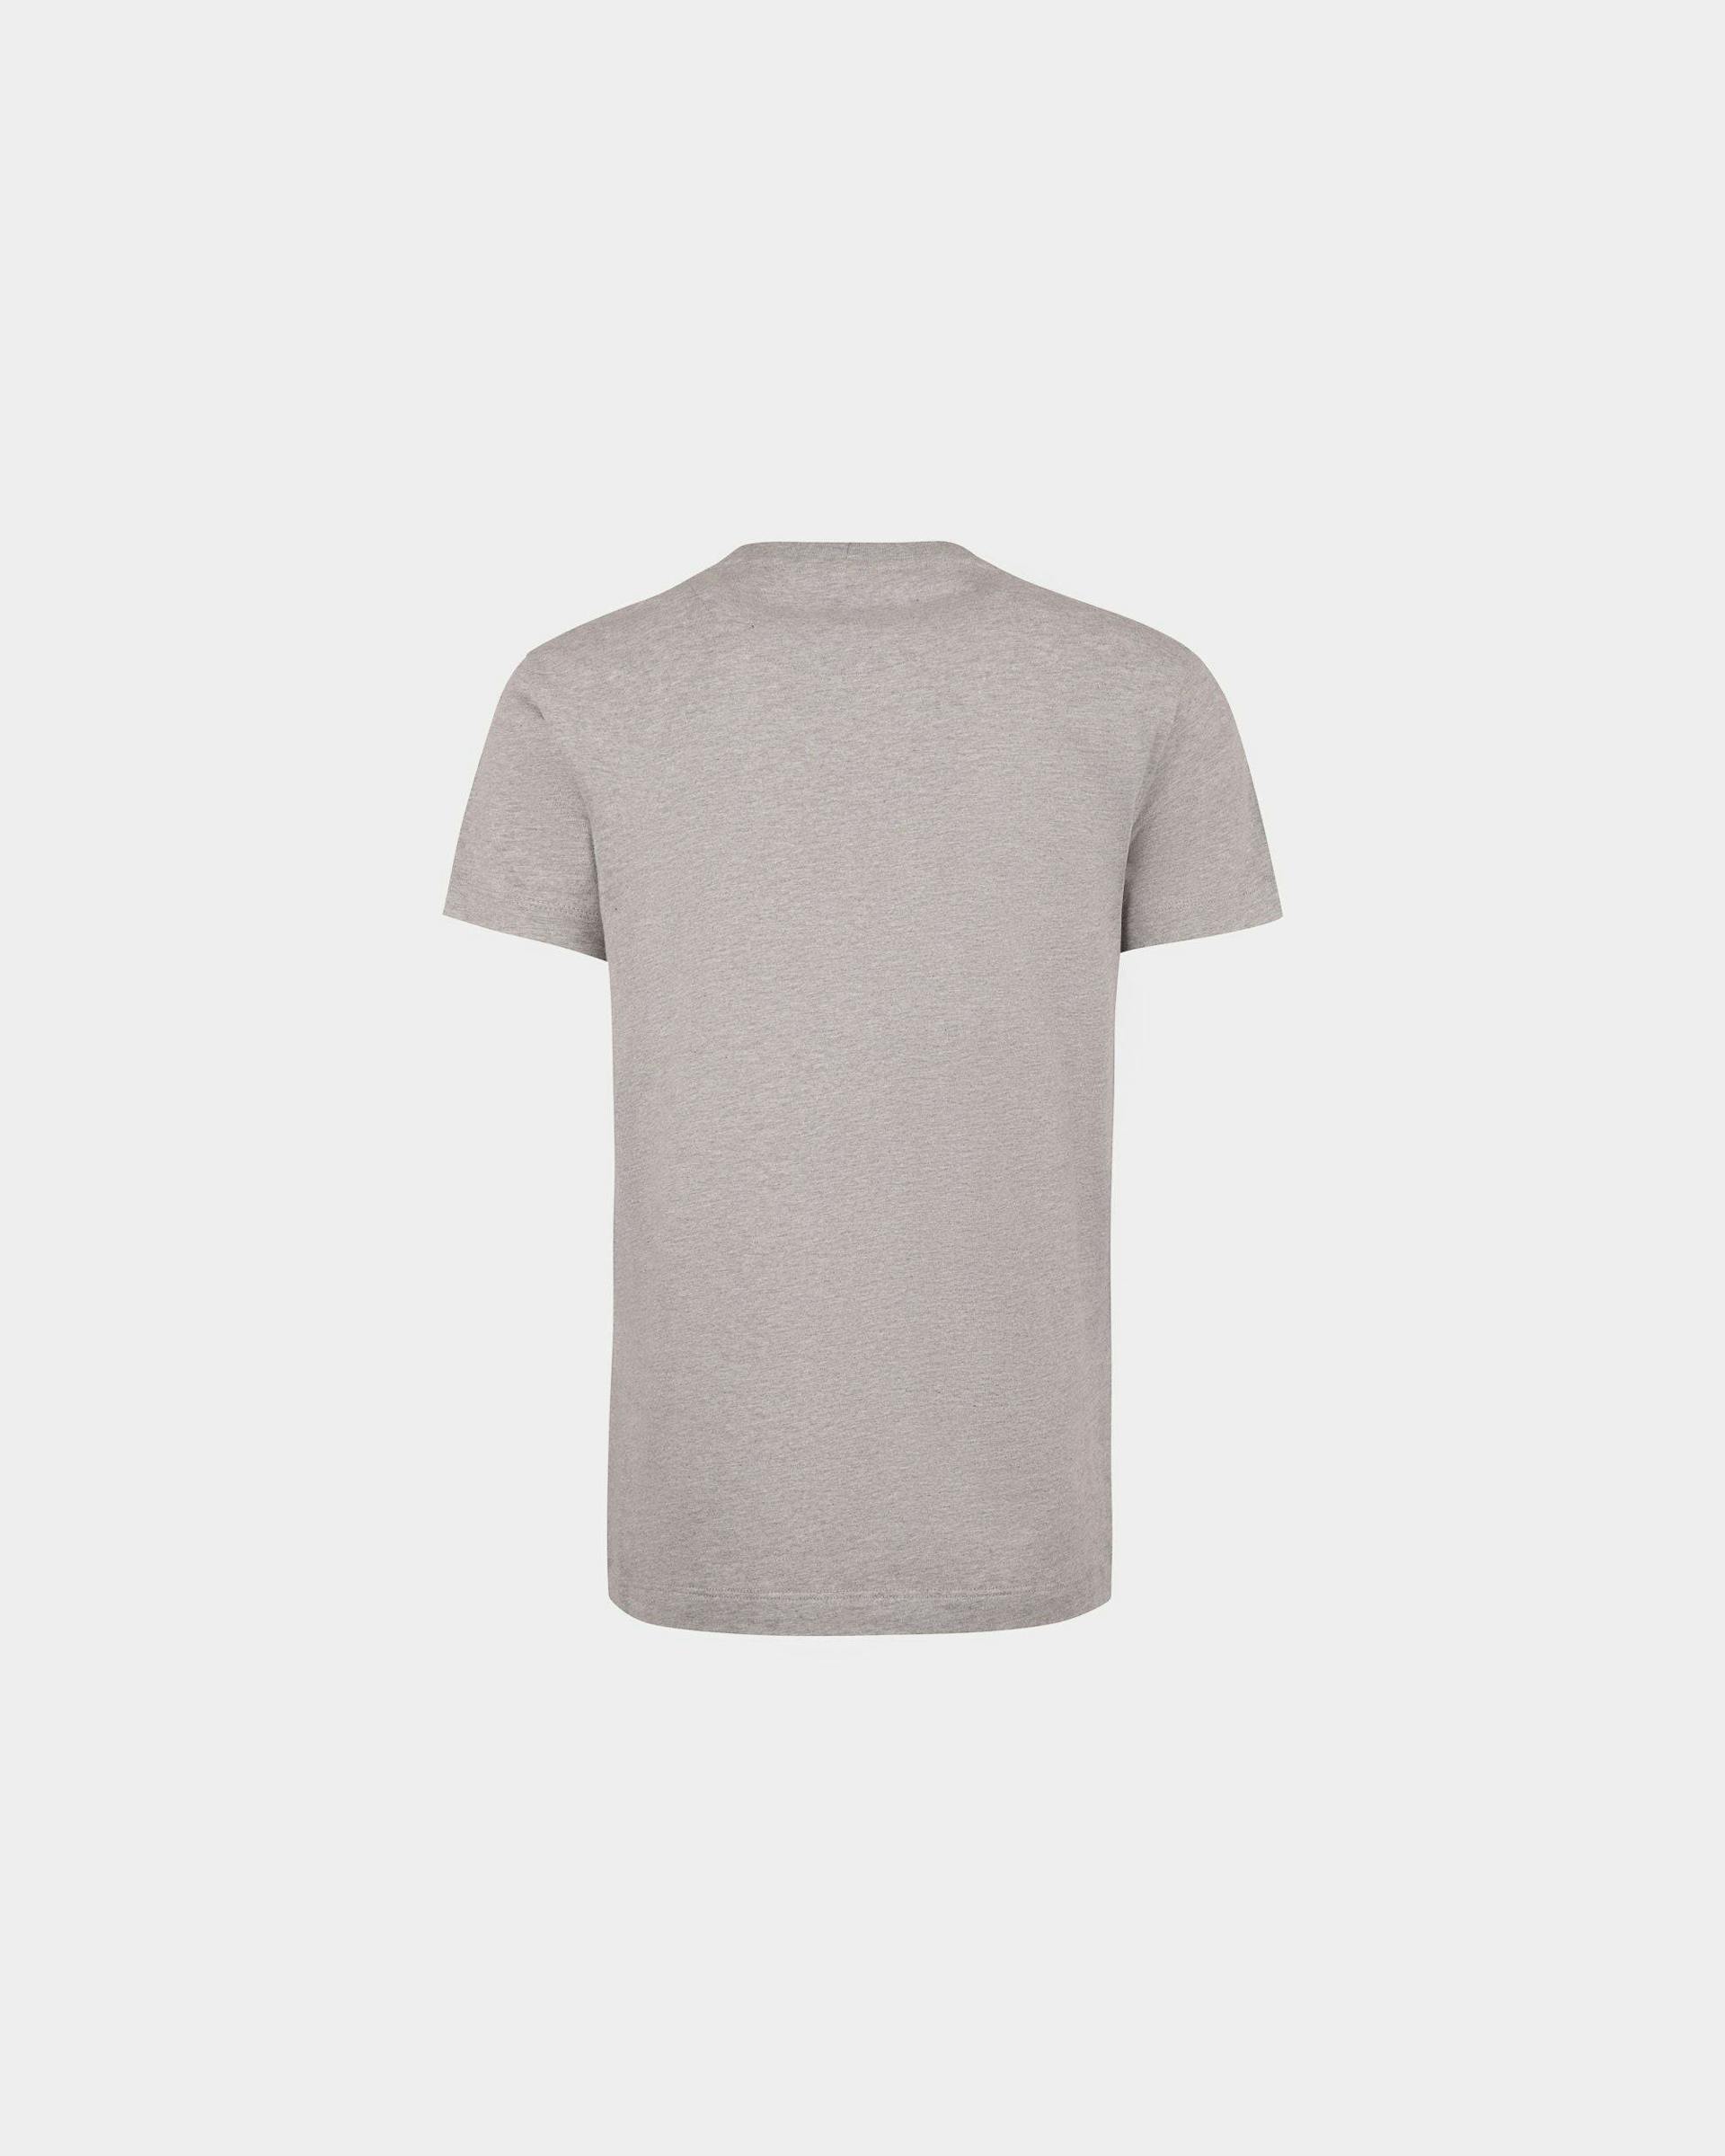 Women's T-Shirt in Mélange Gray Cotton | Bally | Still Life Back